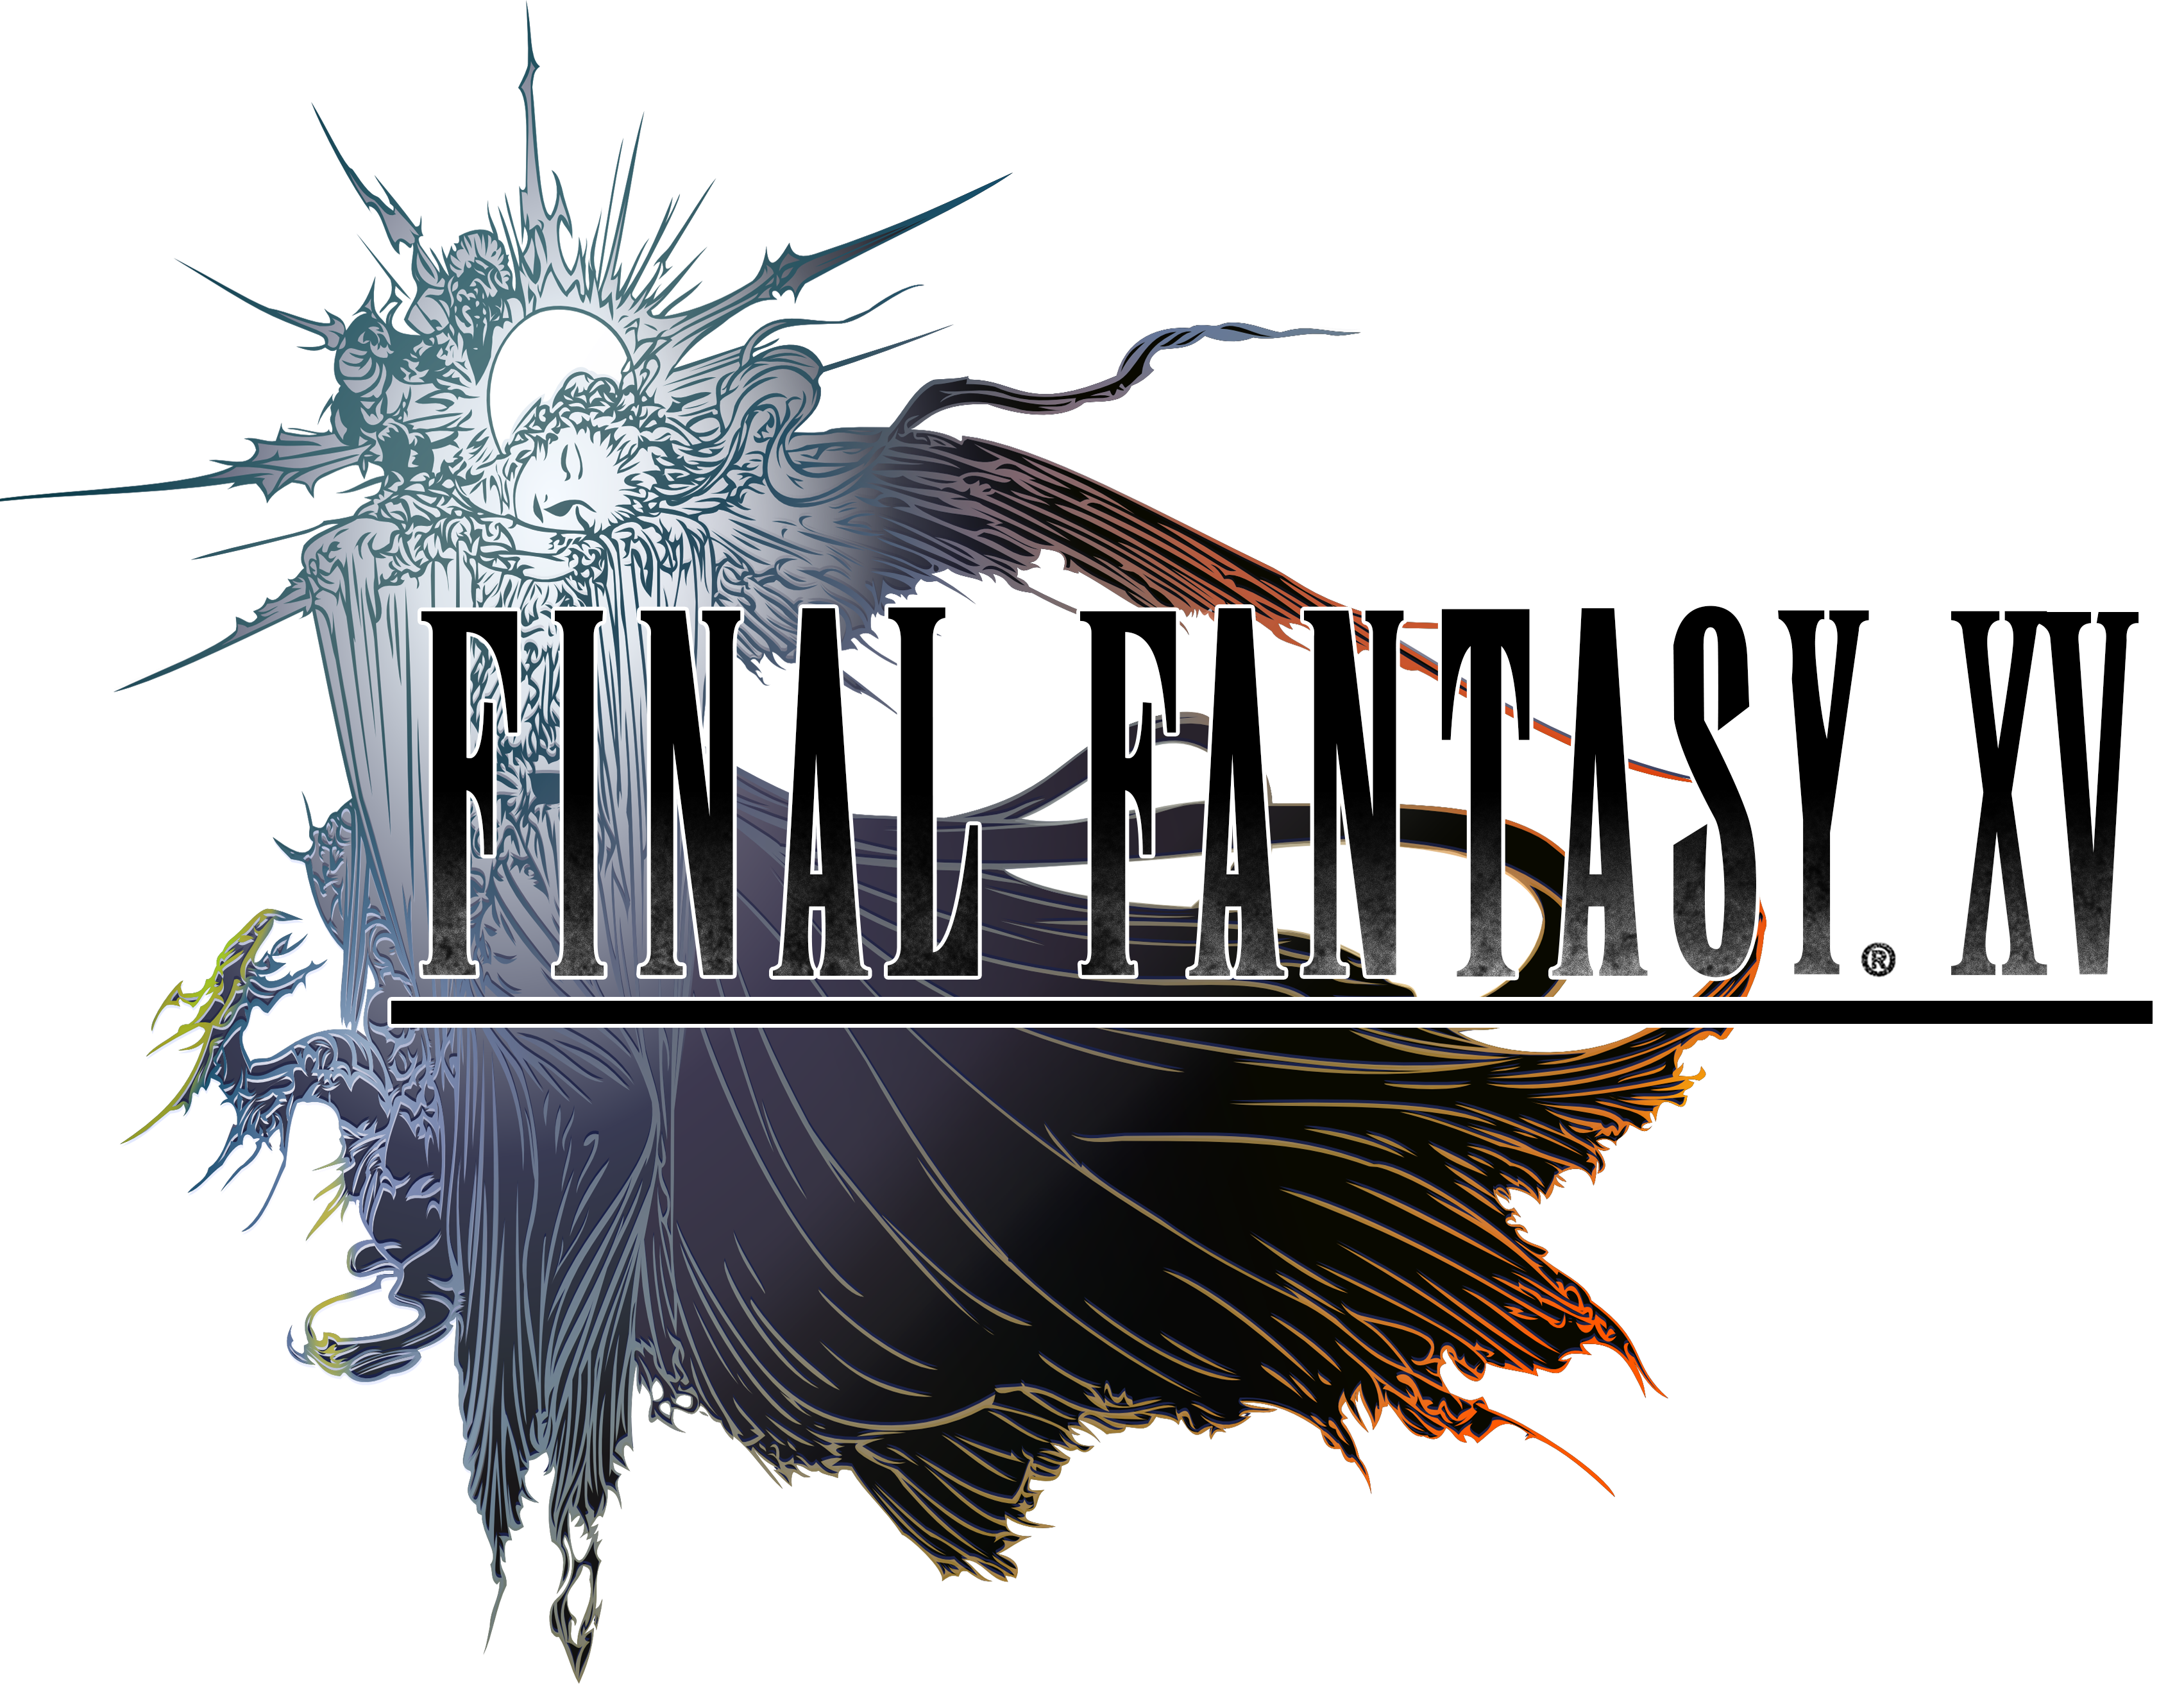 final fantasy logo